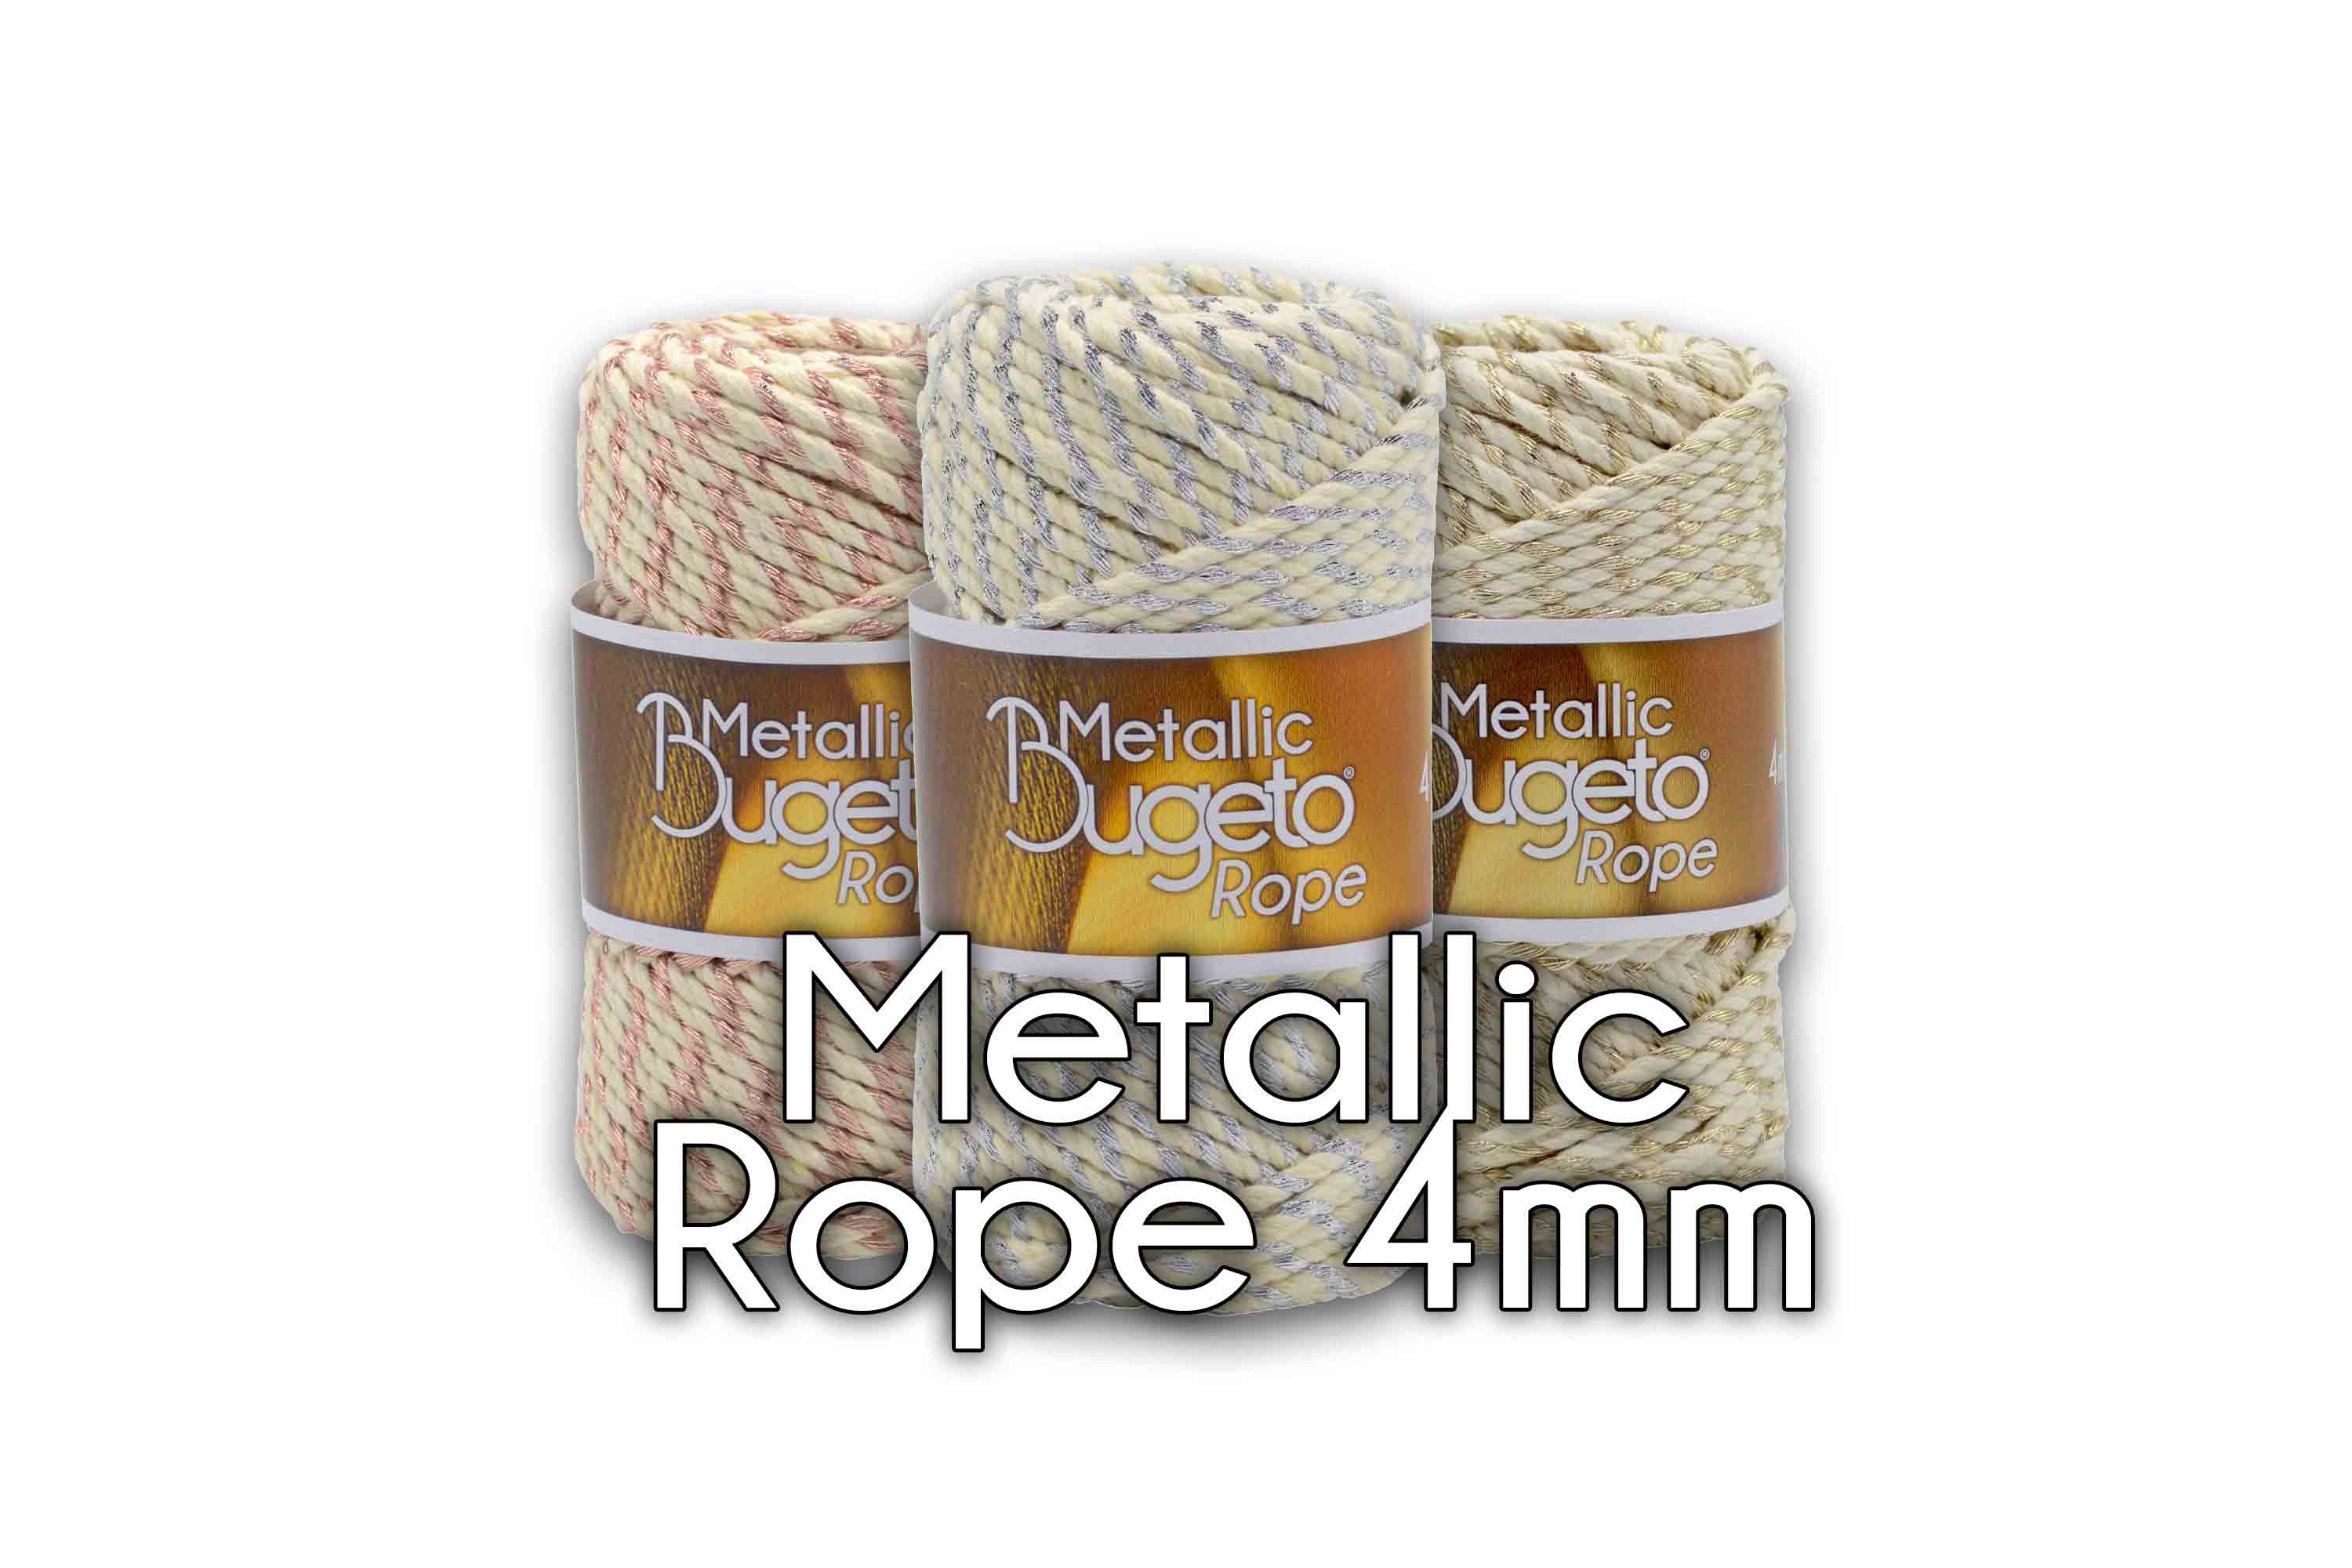 rope twist yarns cotton yarn recycled cotton metallic rope 2ply cotton 1ply metallic metallic twist metallic wall type bugeto yarn